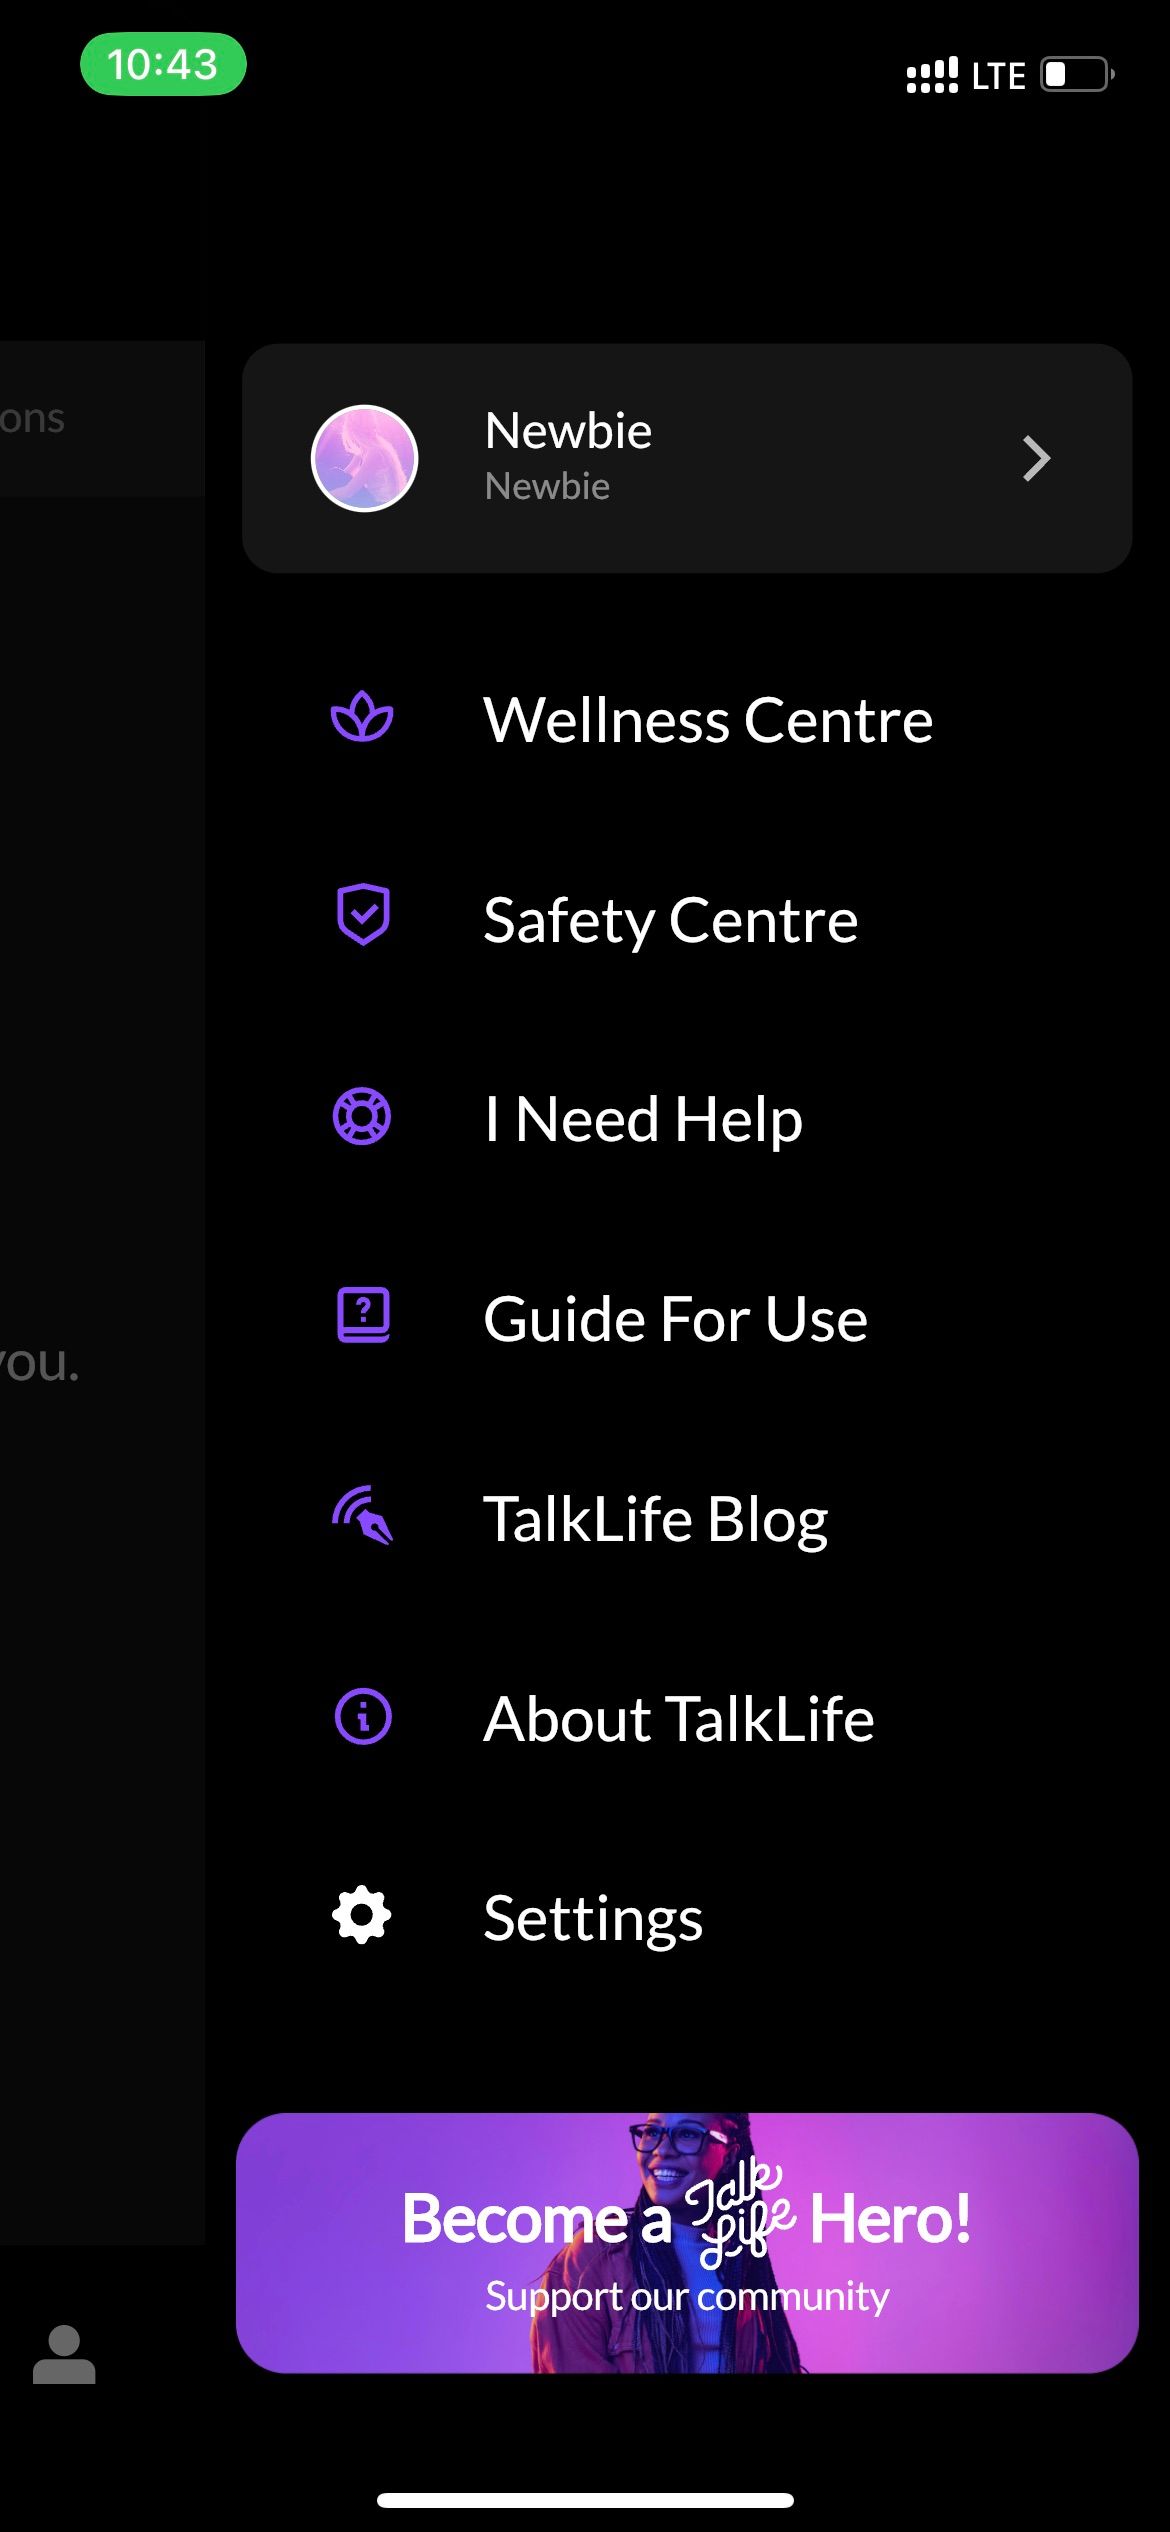 TalkLife menu bar showing different options